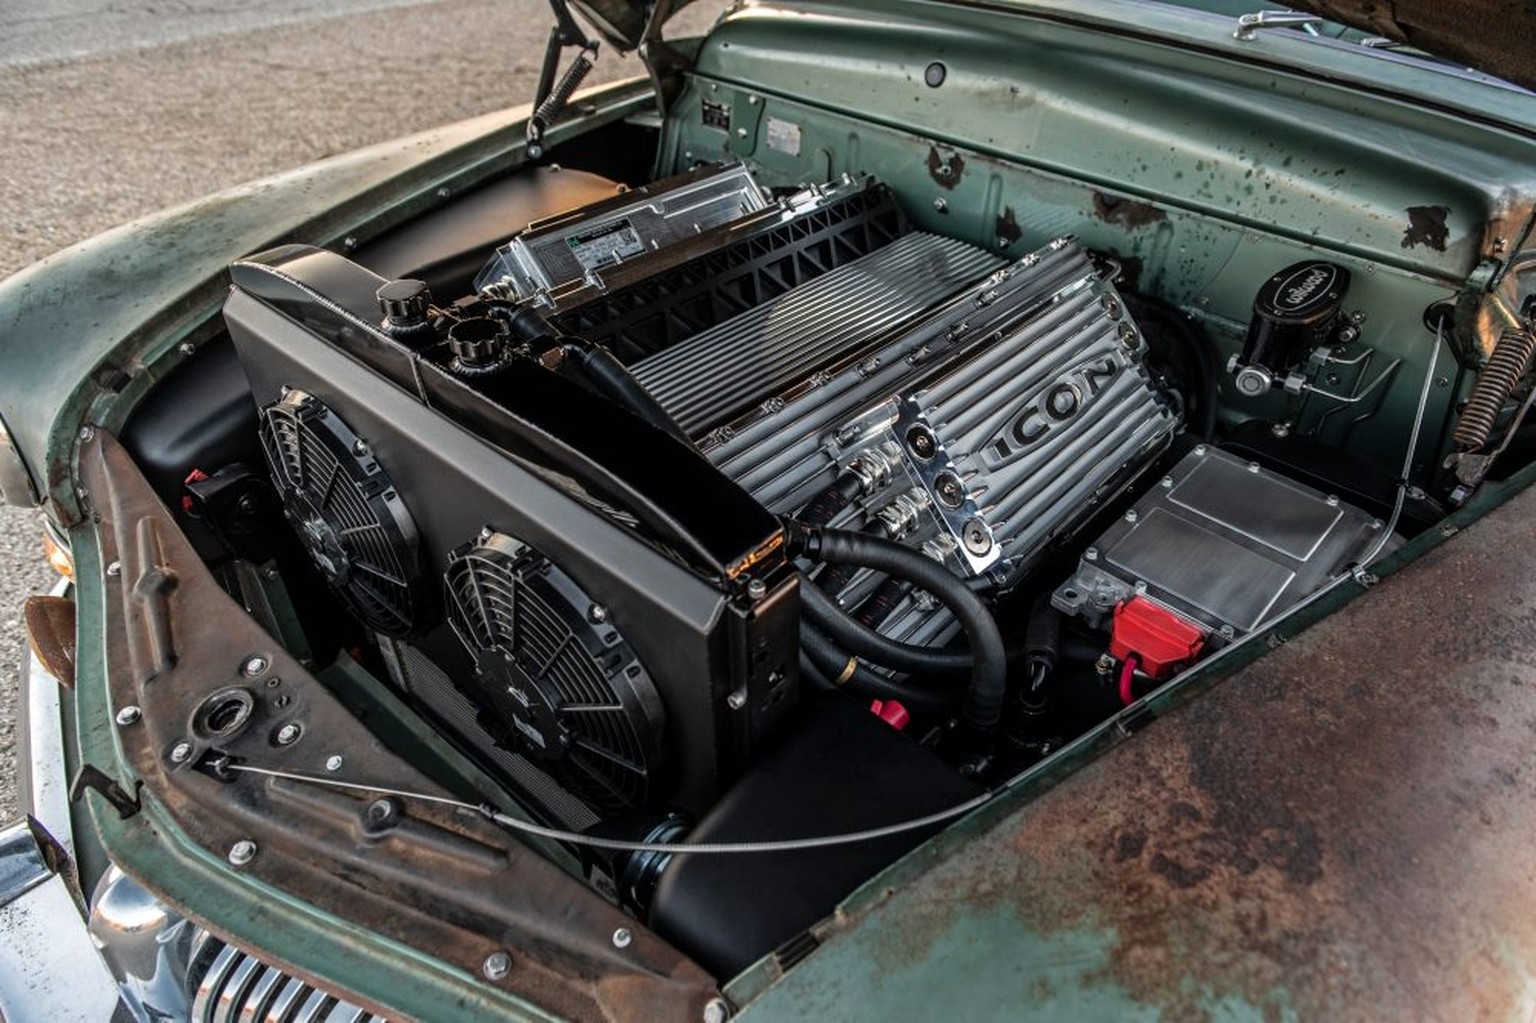 1949 mercury all electric EV auto motor tesla elektrisch retro USA kalifornien https://www.icon4x4.com/derelict/pastprojects/37